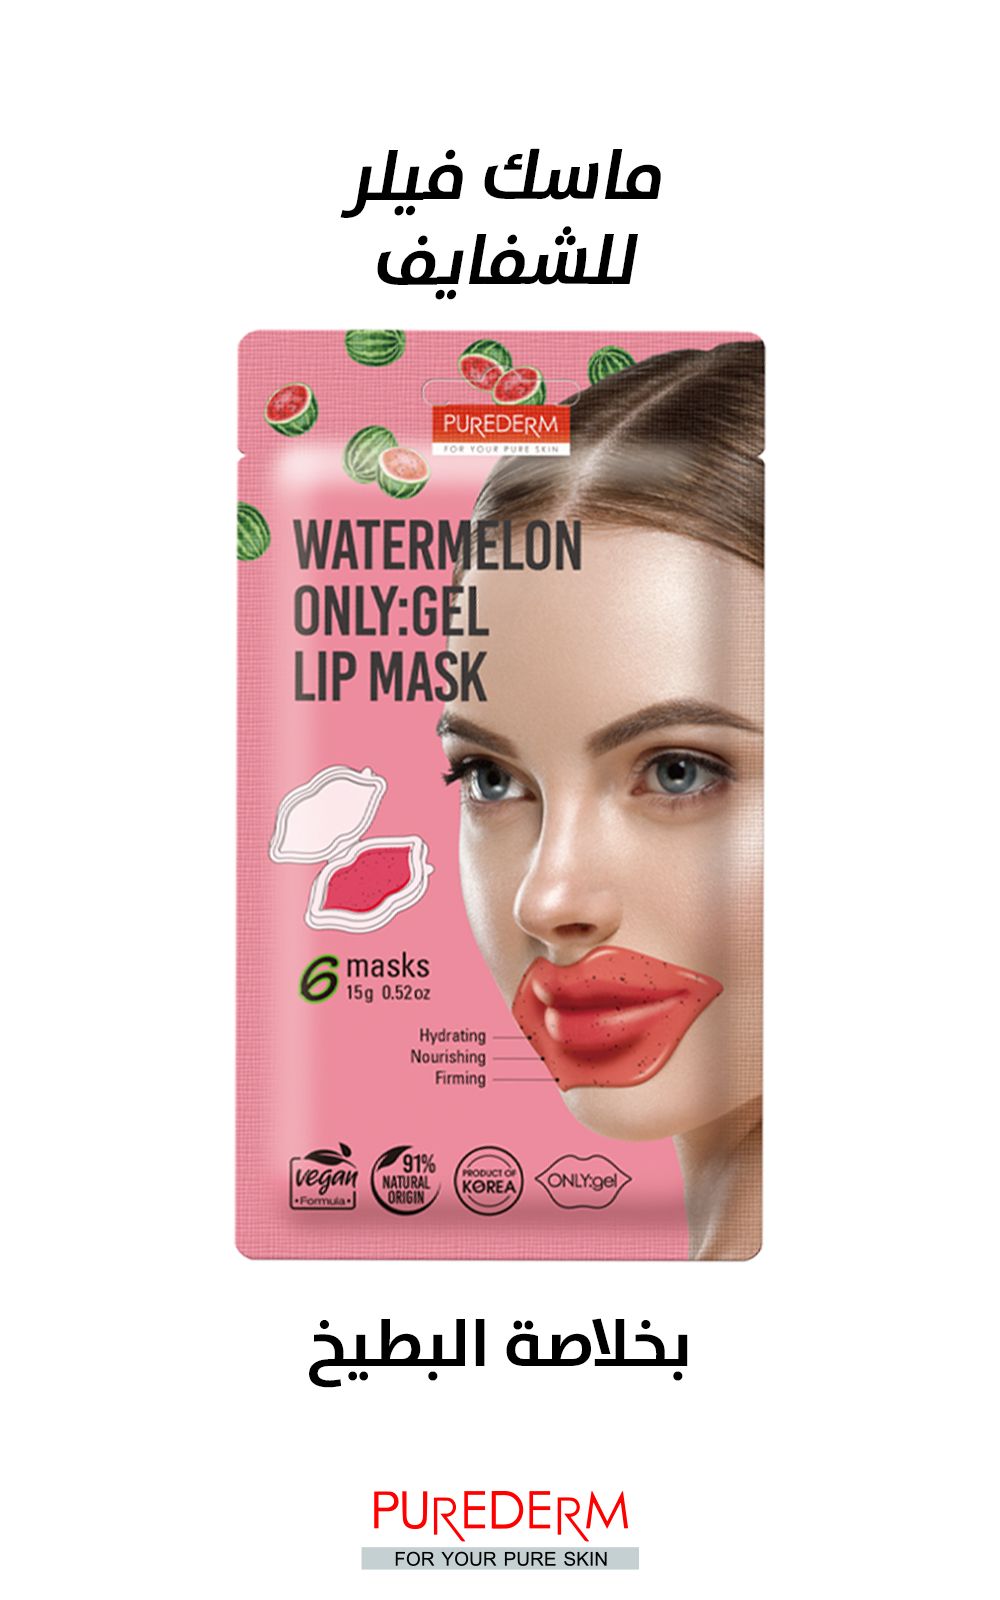 Purederm watermelon only:gel lip mask